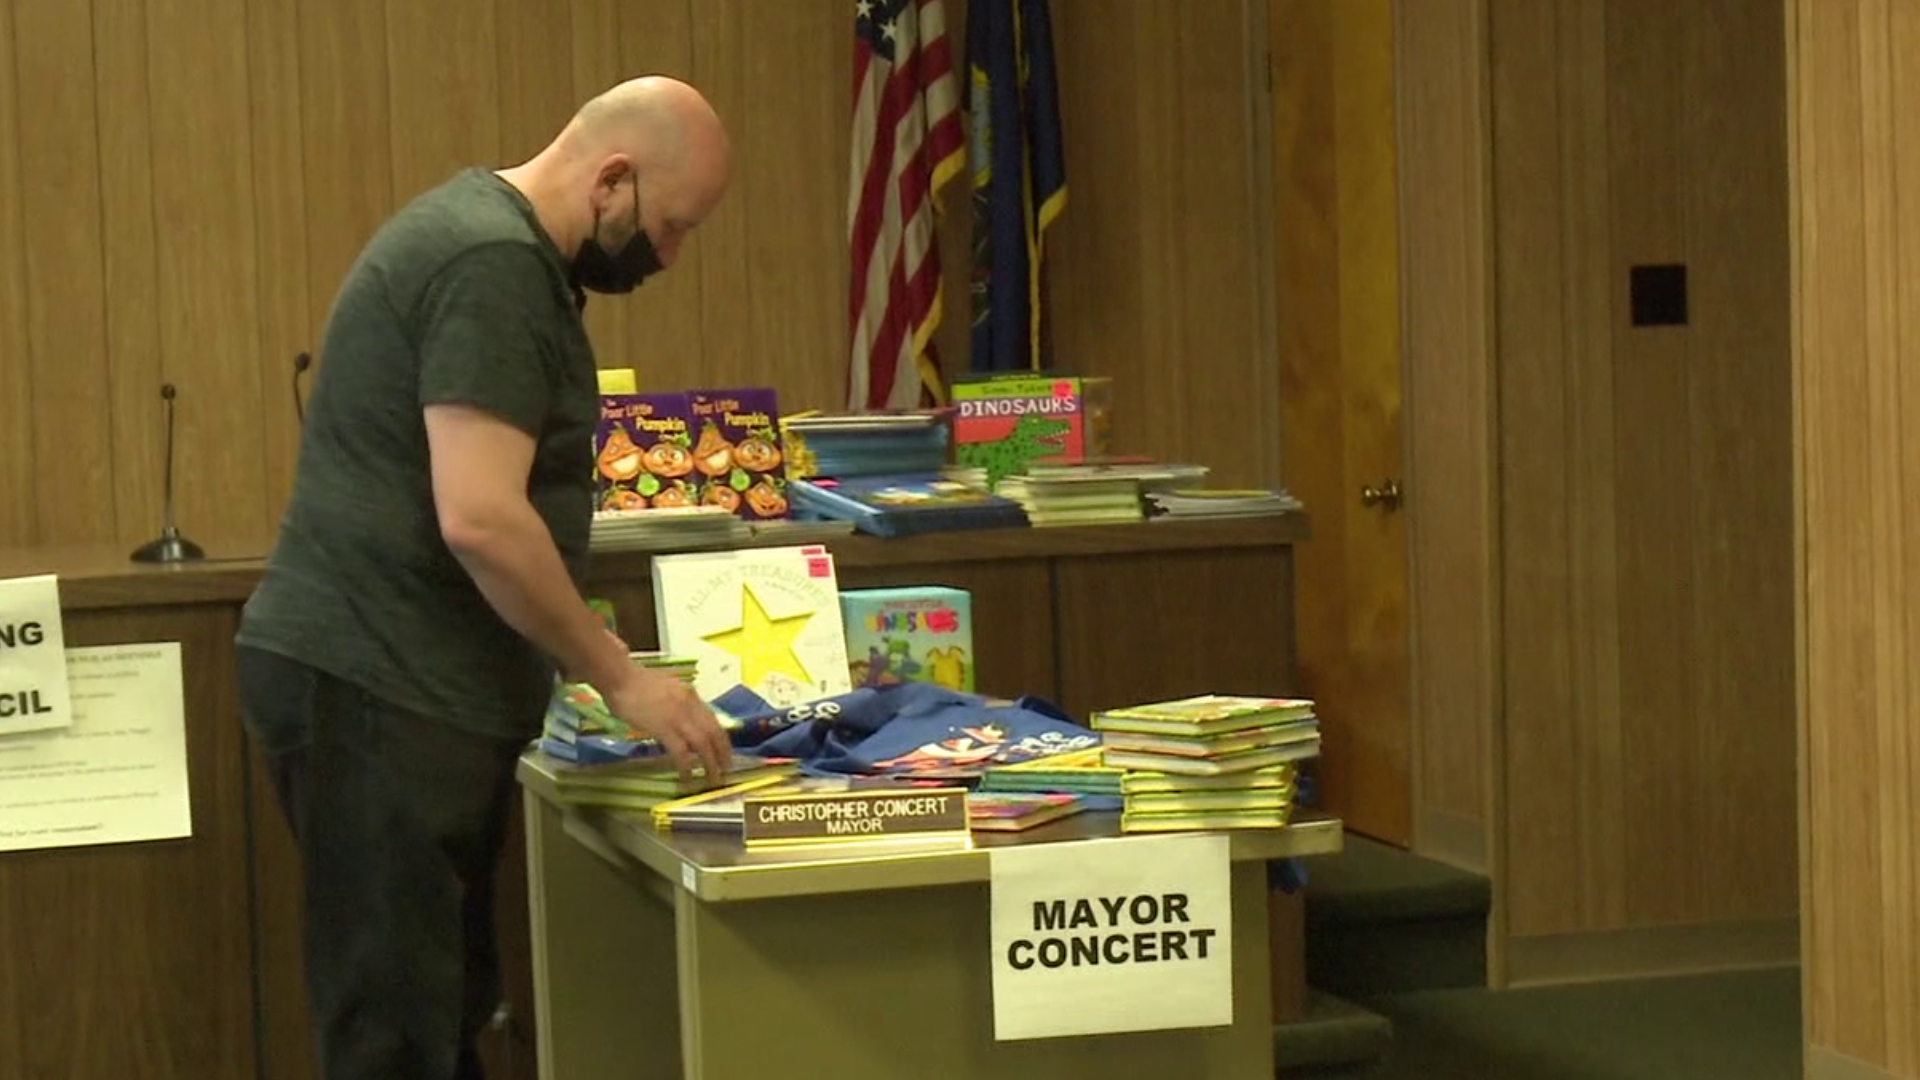 Last week, Mayor Concert gave away 400 new books in his community.